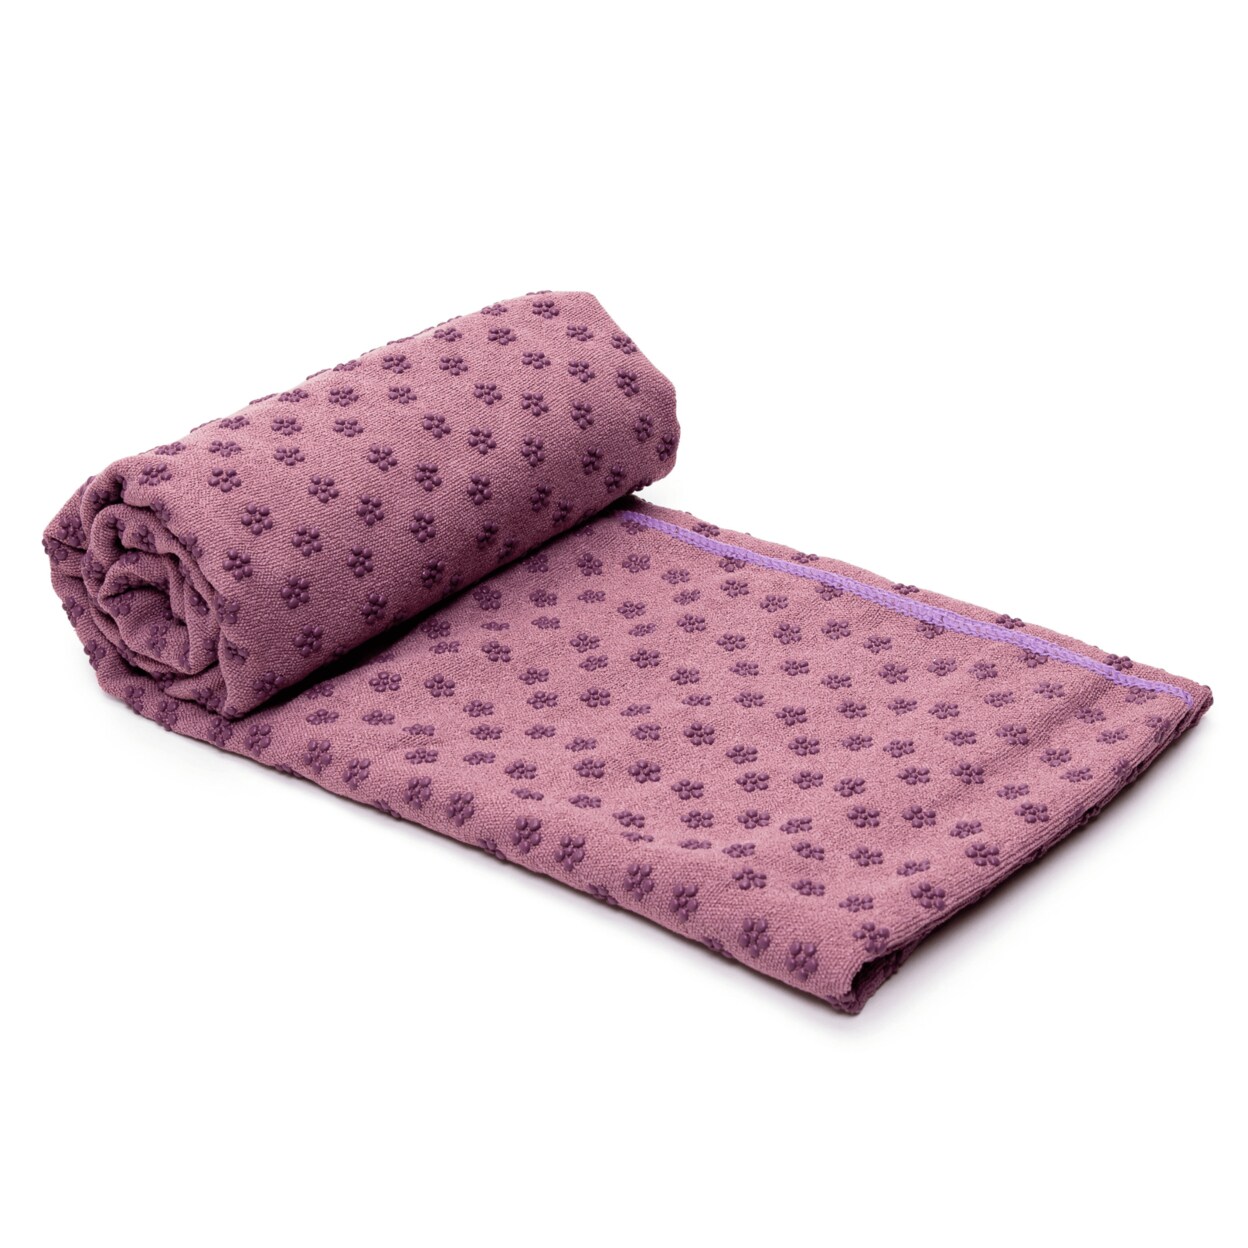 Yoga Towels - Jupiter Gear